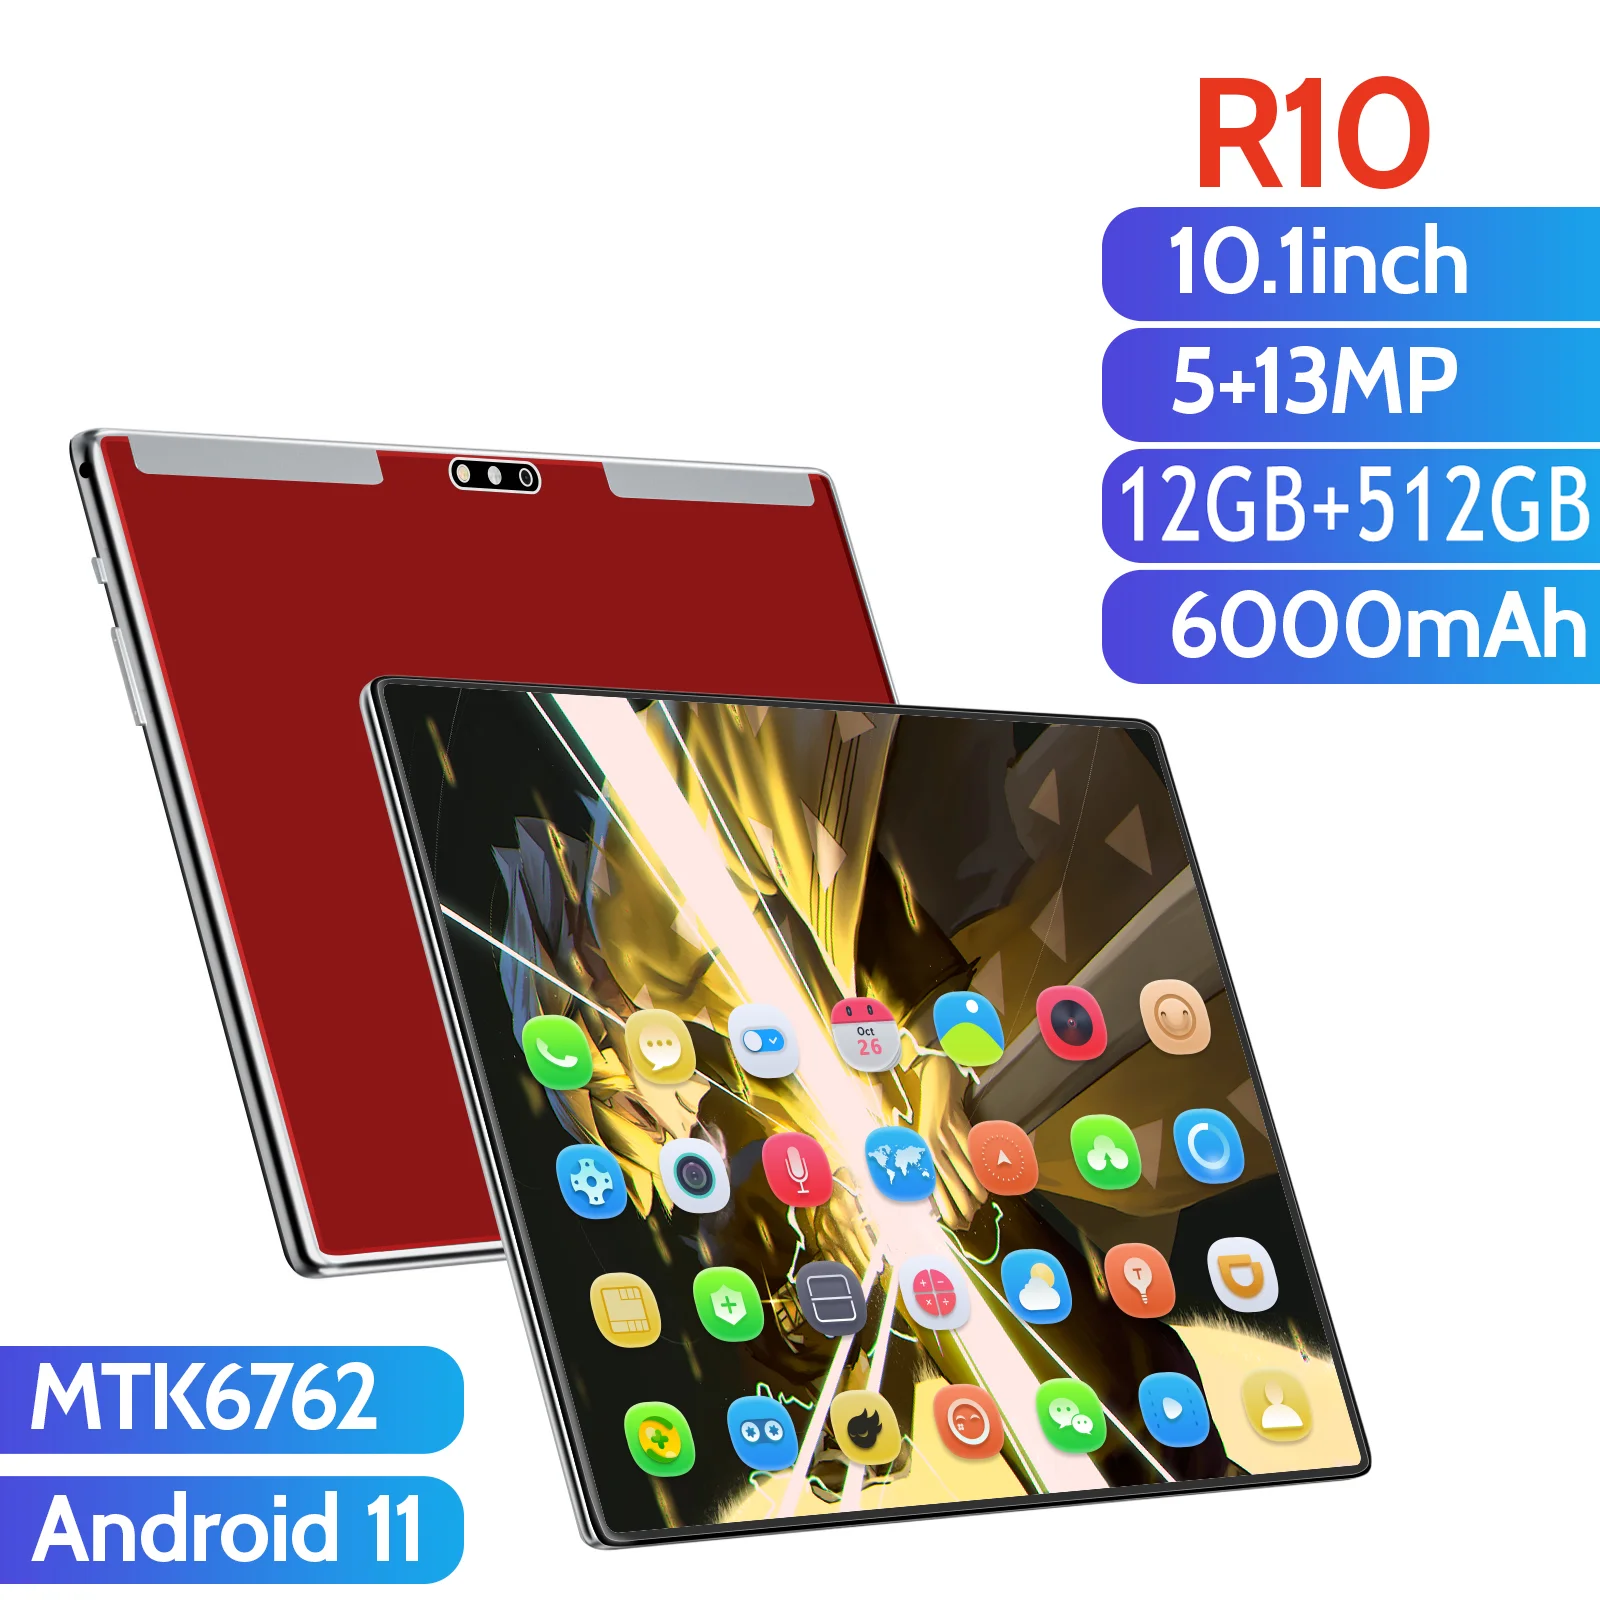 

Прошивка R10 планшетный ПК с Wi-Fi 4G телефон 6000 мАч IPS 10,1 дюйма Hоутбук 512 Гб Две SIM-карты Wi-Fi Android 11 Google Play горячая Распродажа Pad